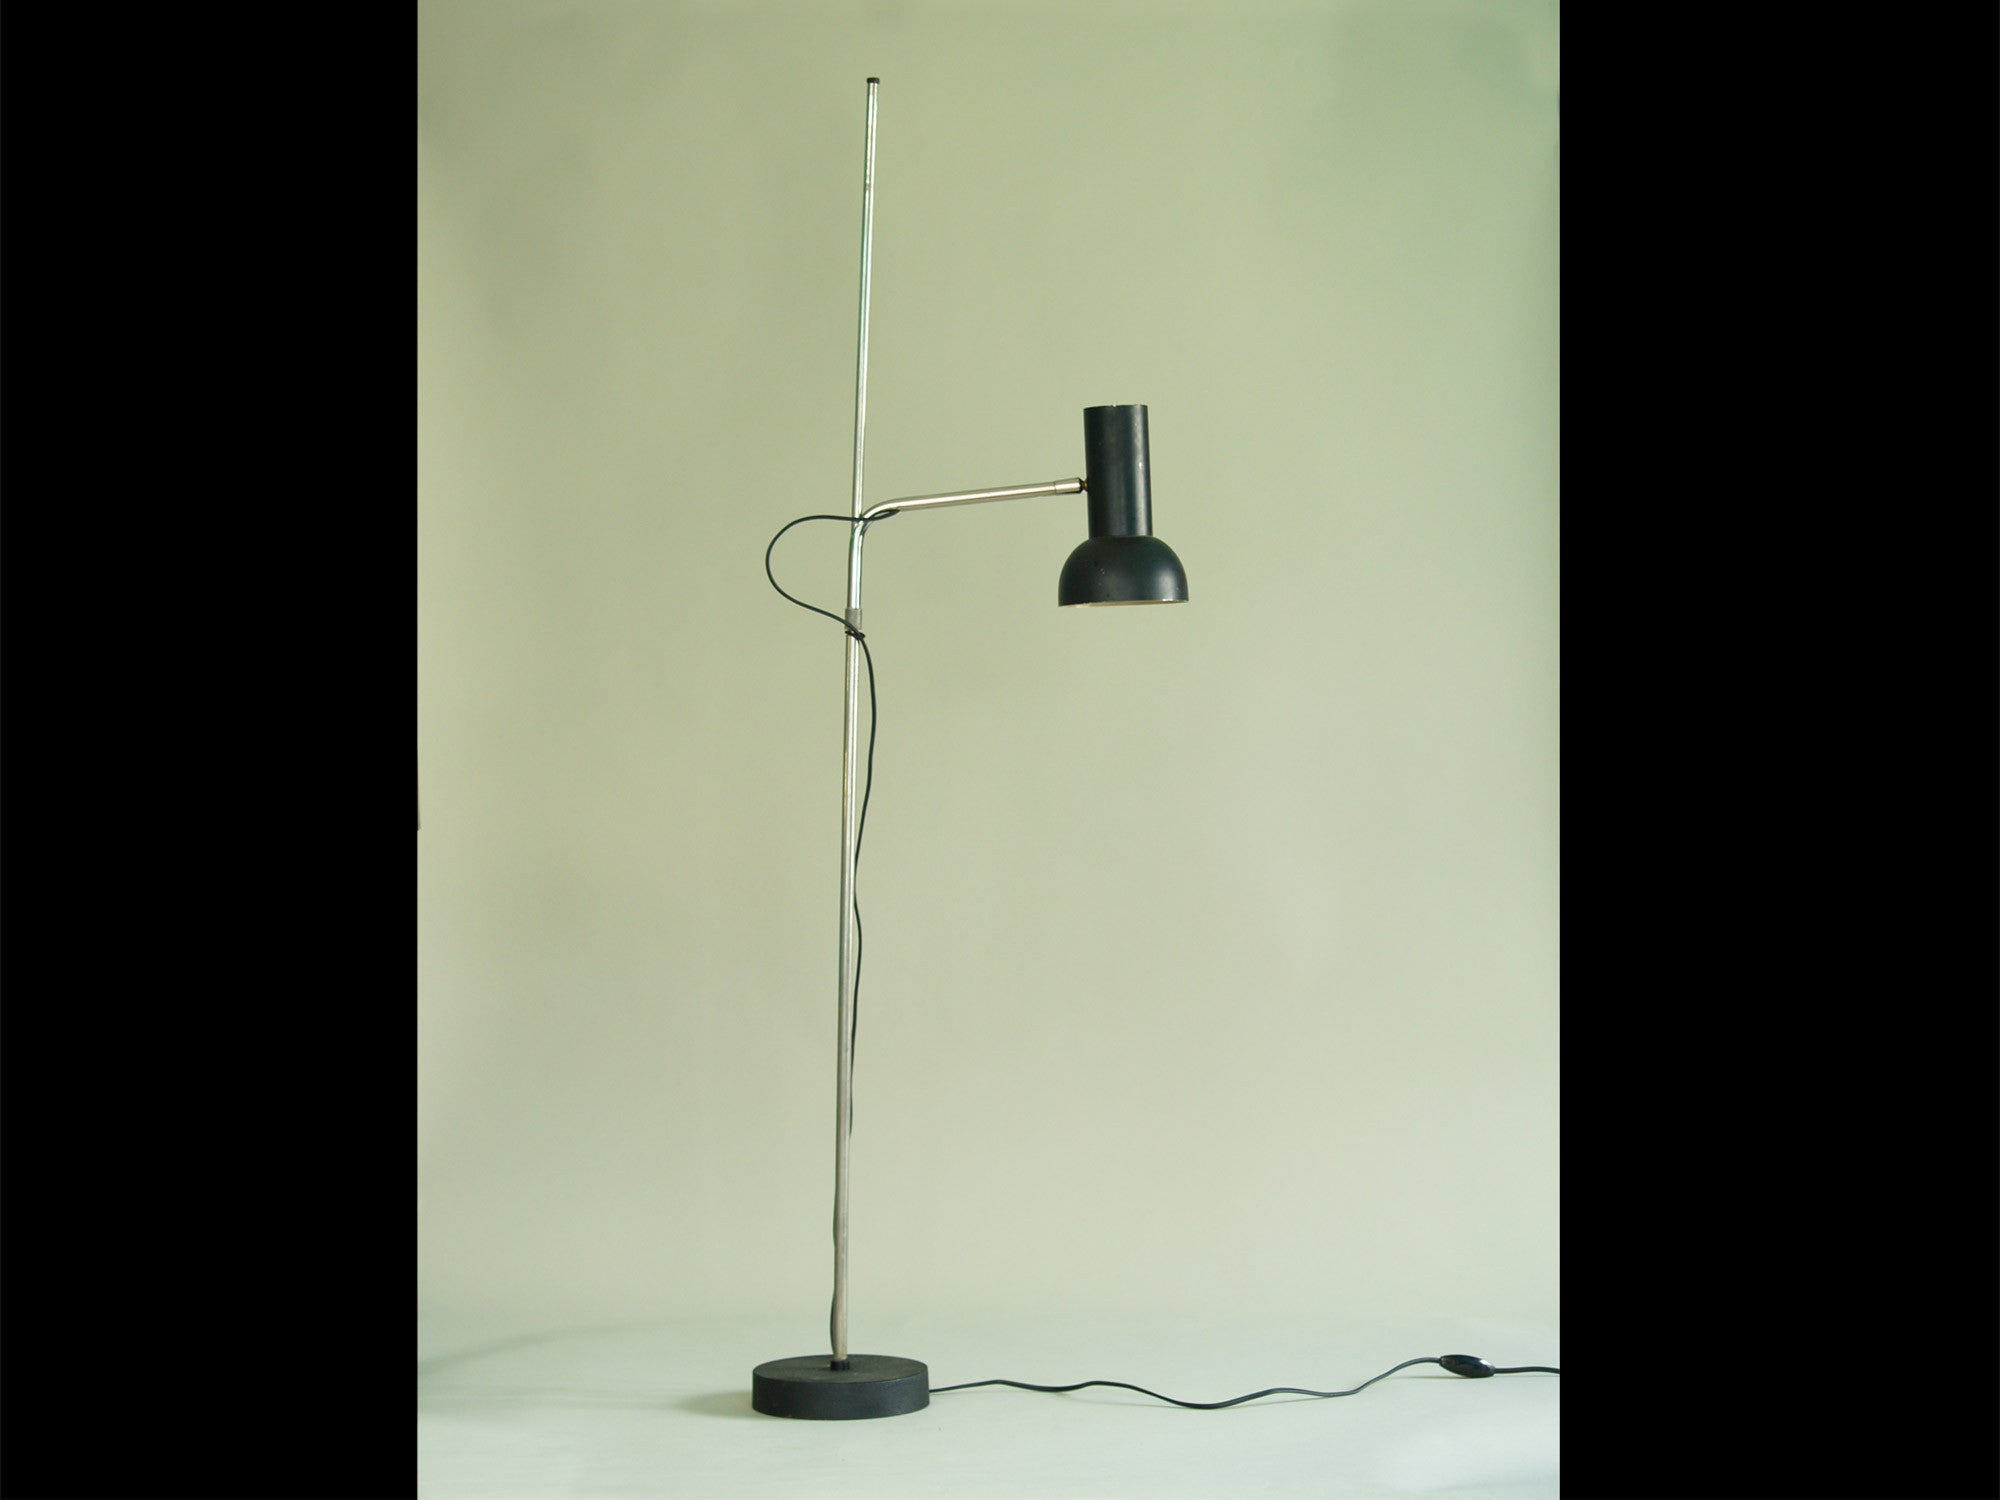 Lampadaire réglable / liseuse moderniste, France (vers 1960)..Modernist floor lamp, France (circa 1960)